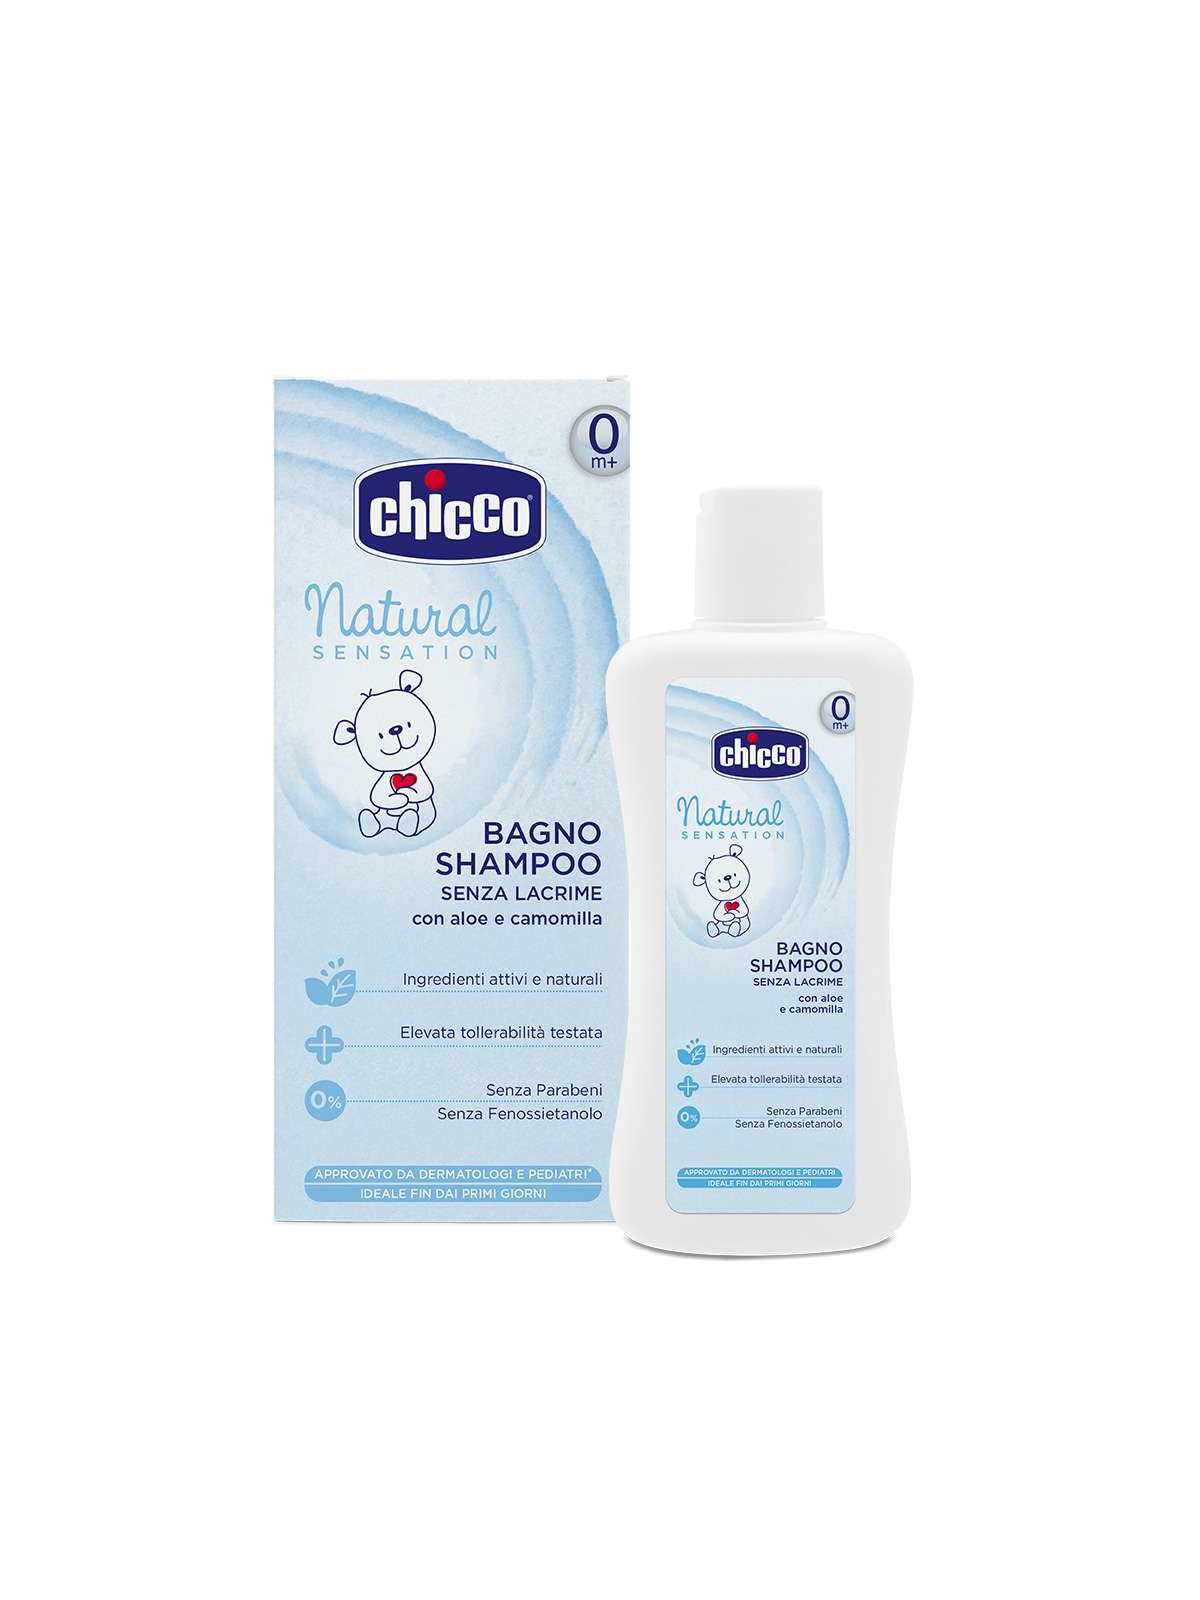 Natural sensation bagno shampoo 200ml - Chicco